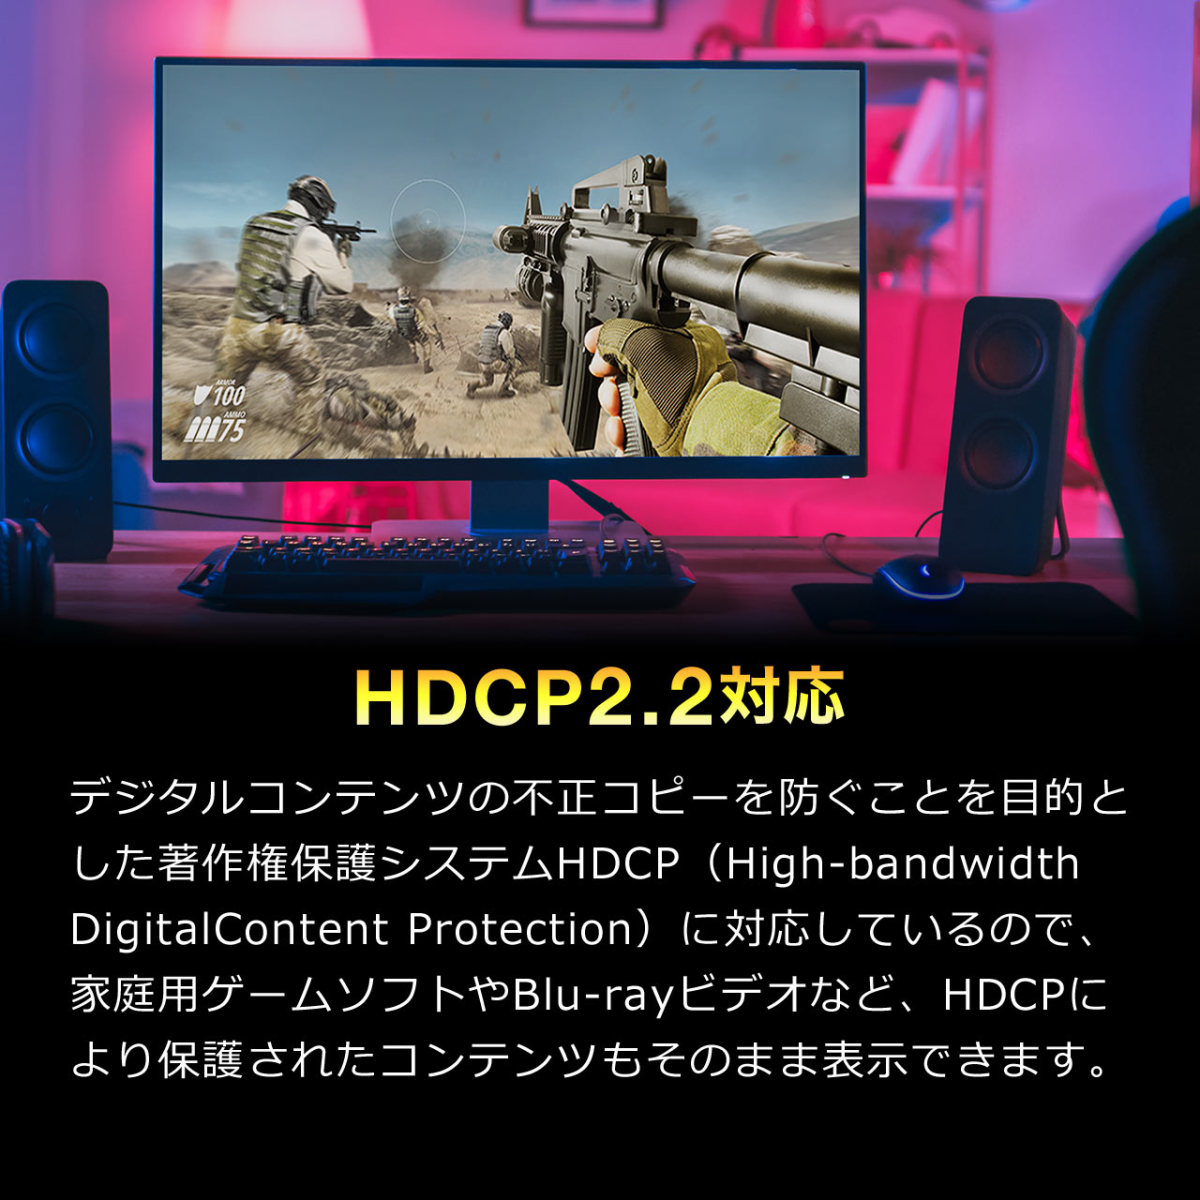 HDMI 切替器 セレクター 4入力1出力 4台 4K 60Hz HDR HDCP2.2 高画質 高解像度 自動 手動 切り替え マグネットシート付 切替 PS5 Switch 400-SW036